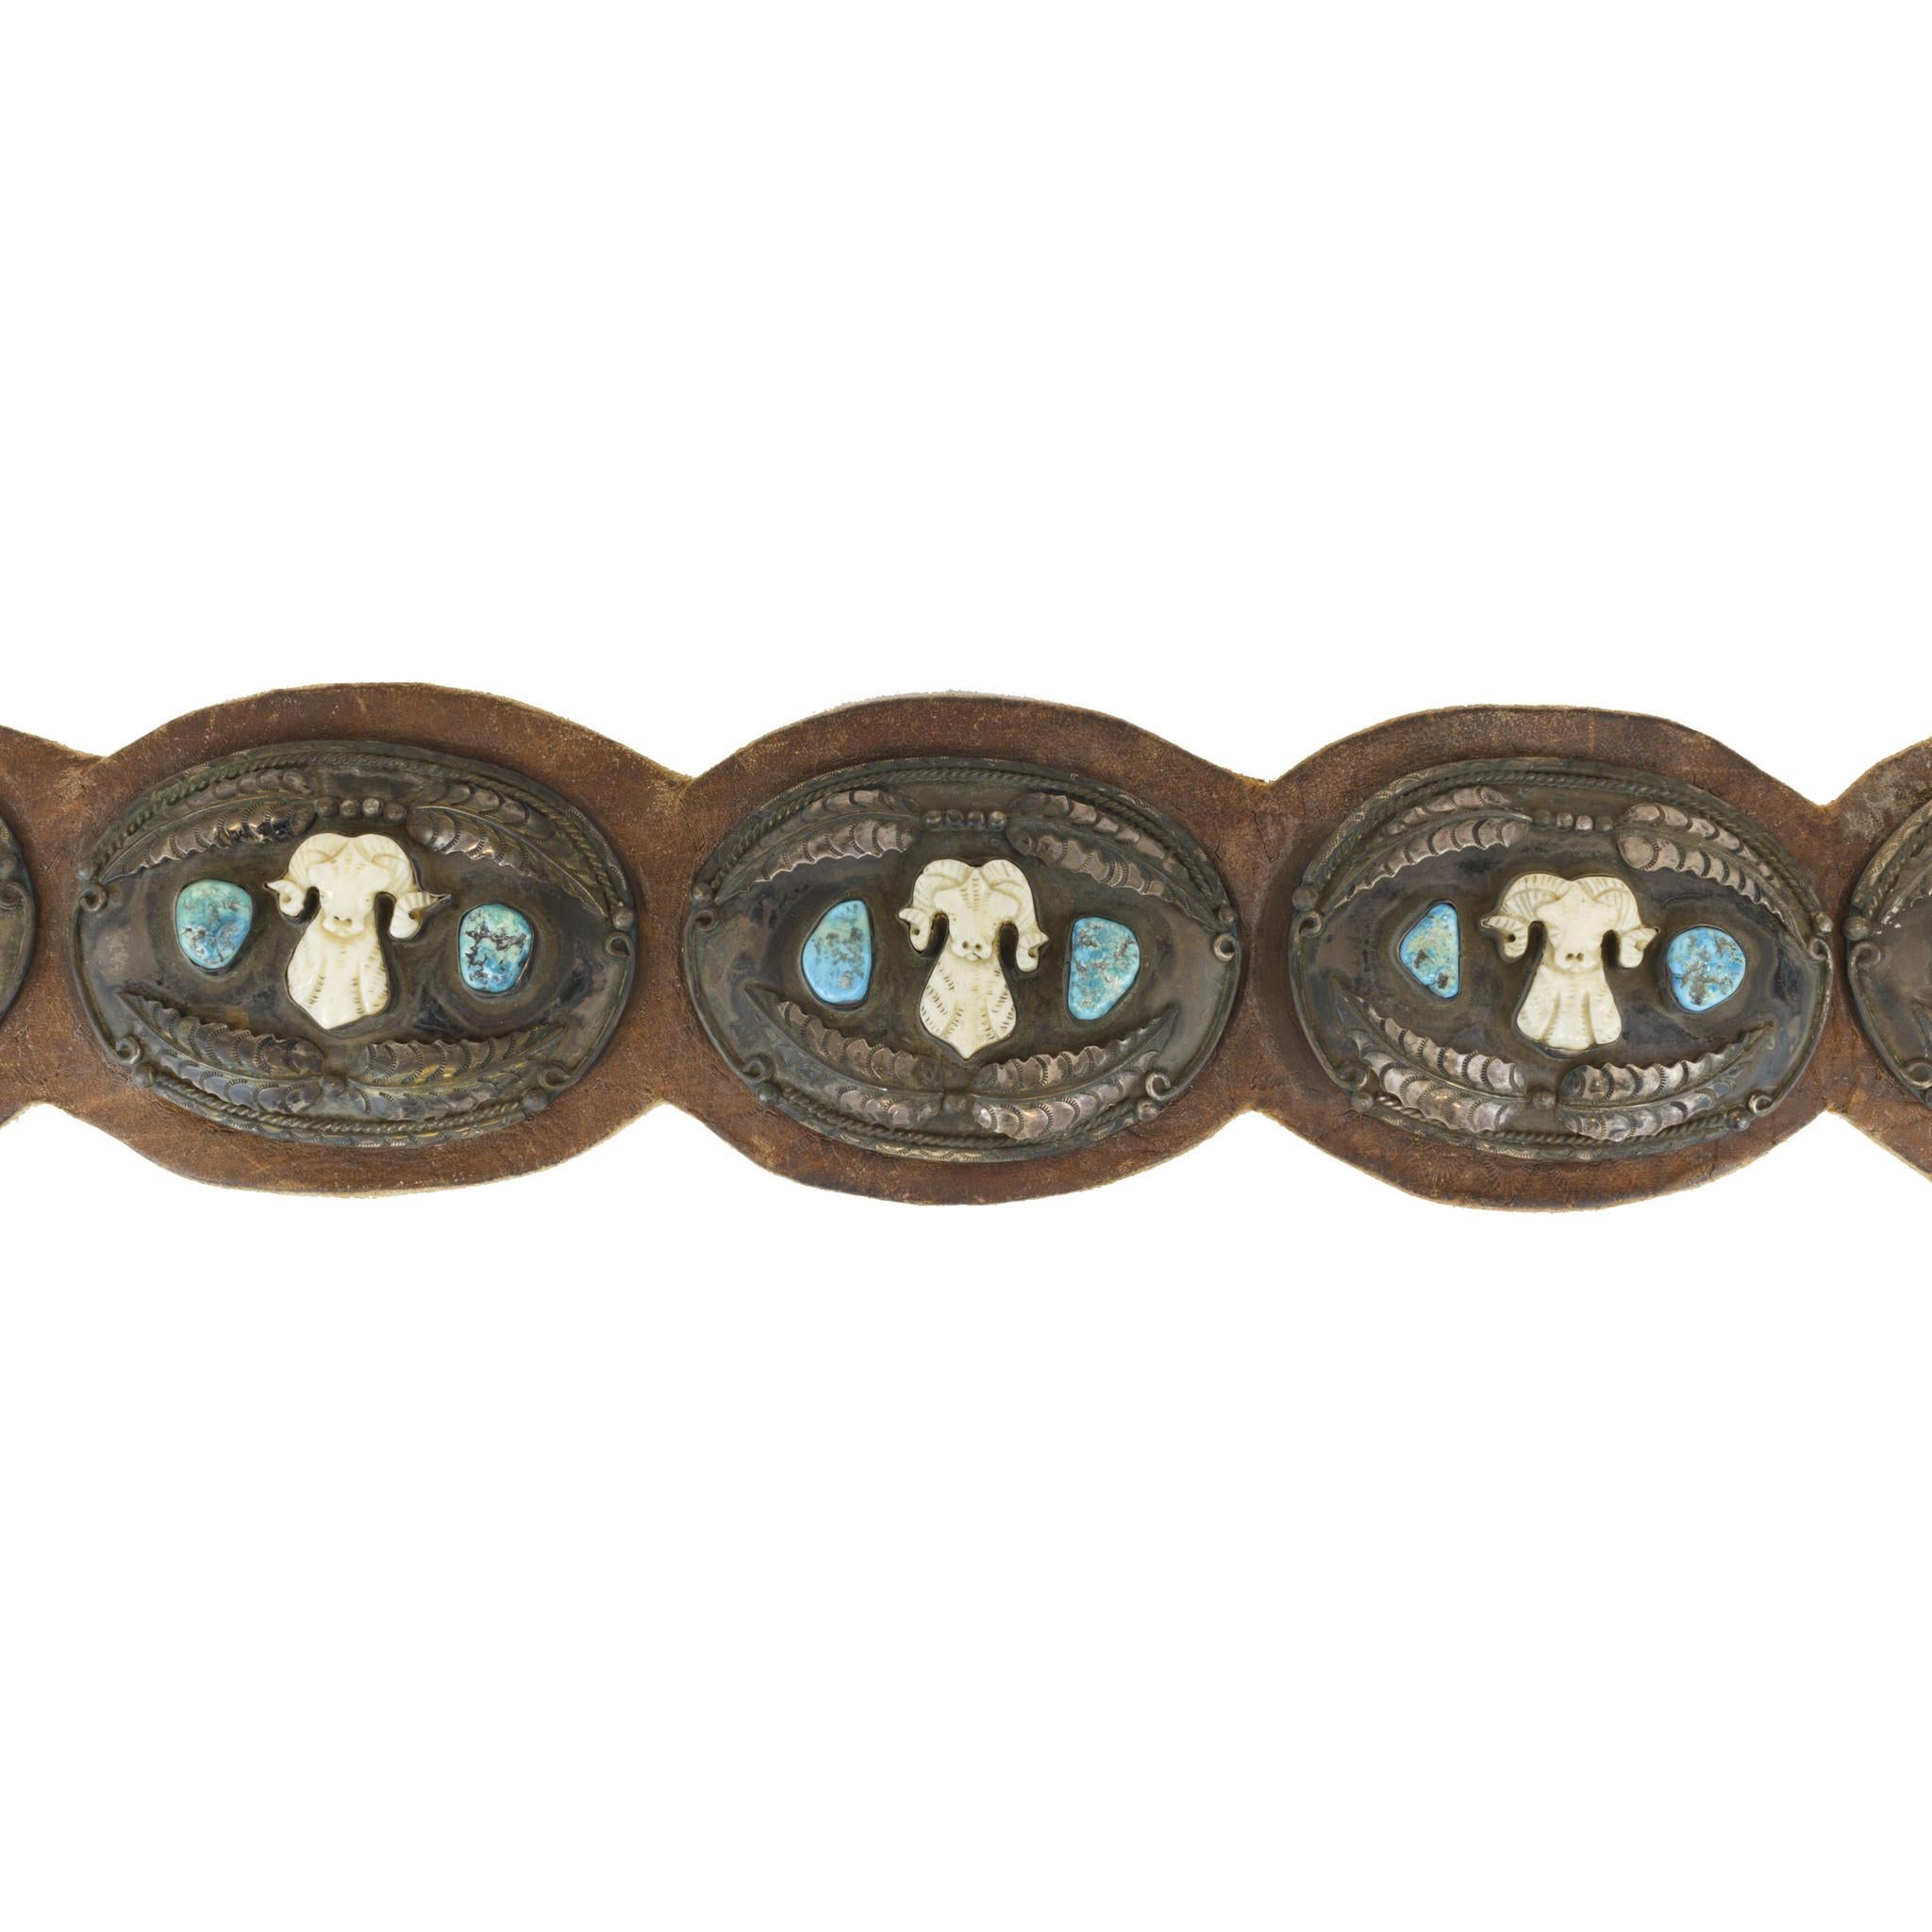 Carved ivory bighorns with Blue Kingman Mine turquoise. Wonderful patina. Original leather; nine conchos total. Signed A.J.M.

PERIOD: After 1950
ORIGIN: Navajo, Southwest
SIZE: Total belt length 56